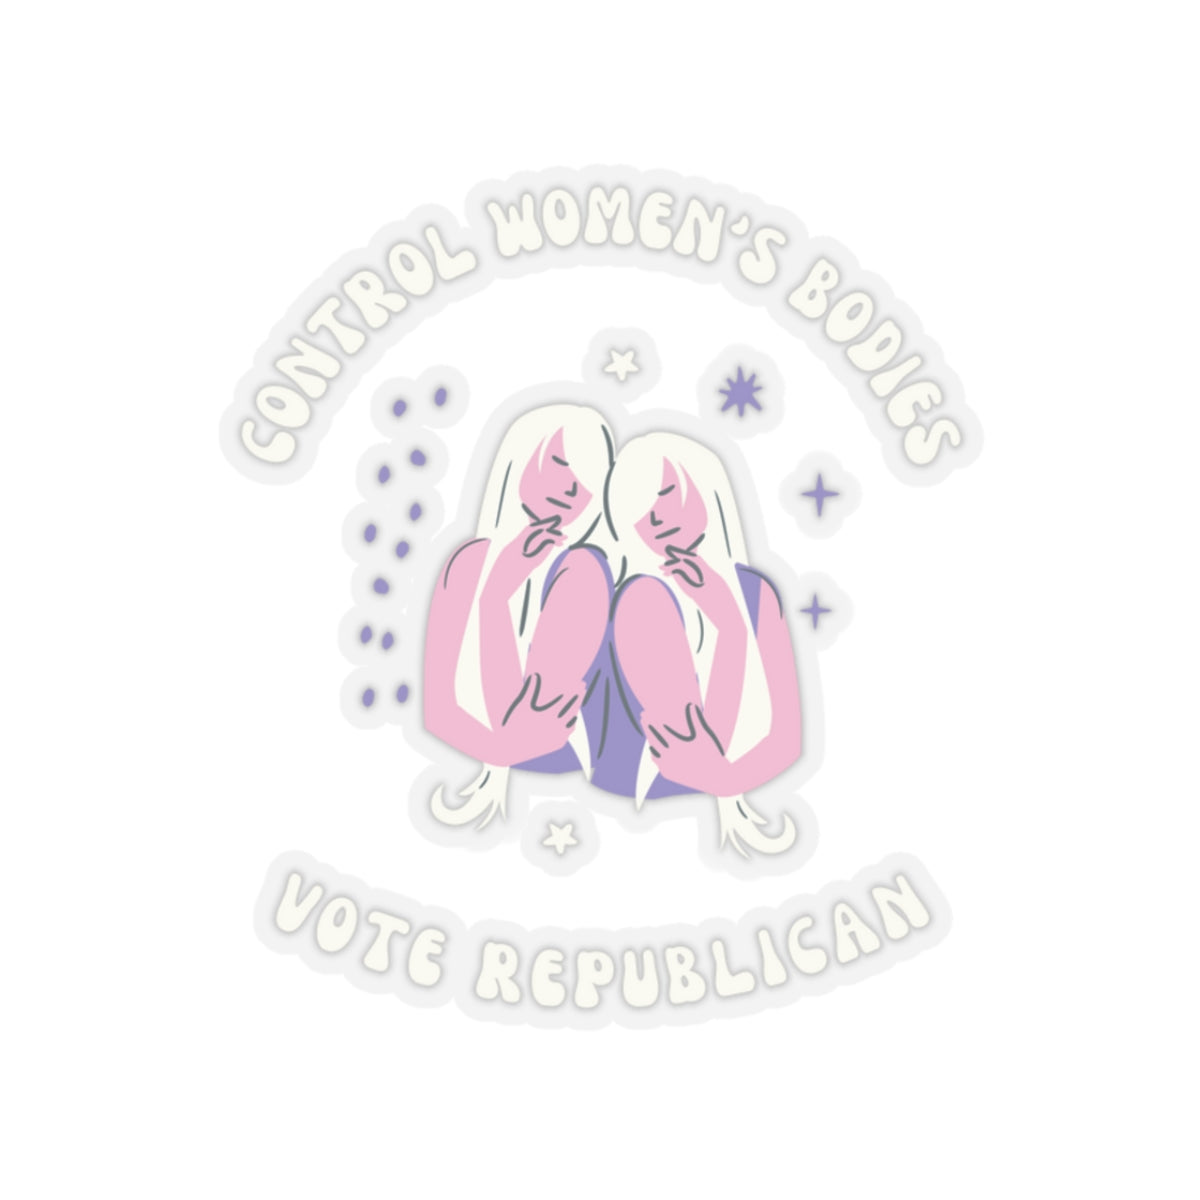 Control Women's Bodies Vote Republican Sticker